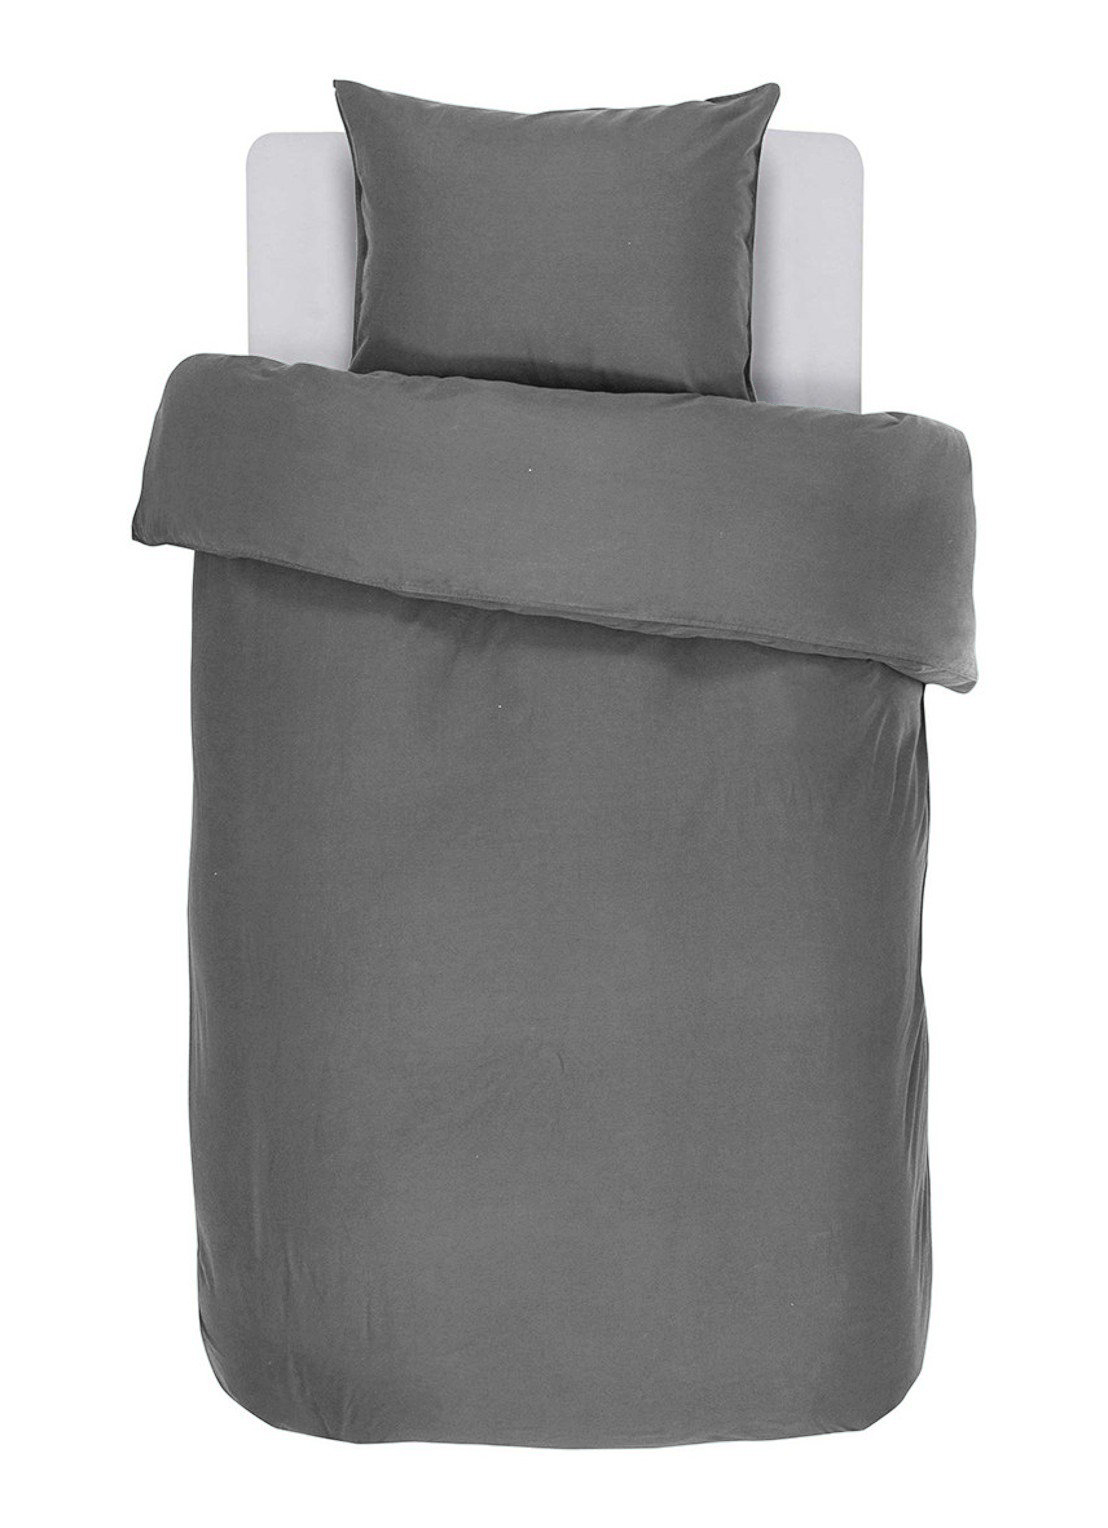 Duvet cover  IRIS, Stone washed uni cotton, 140x200, grey